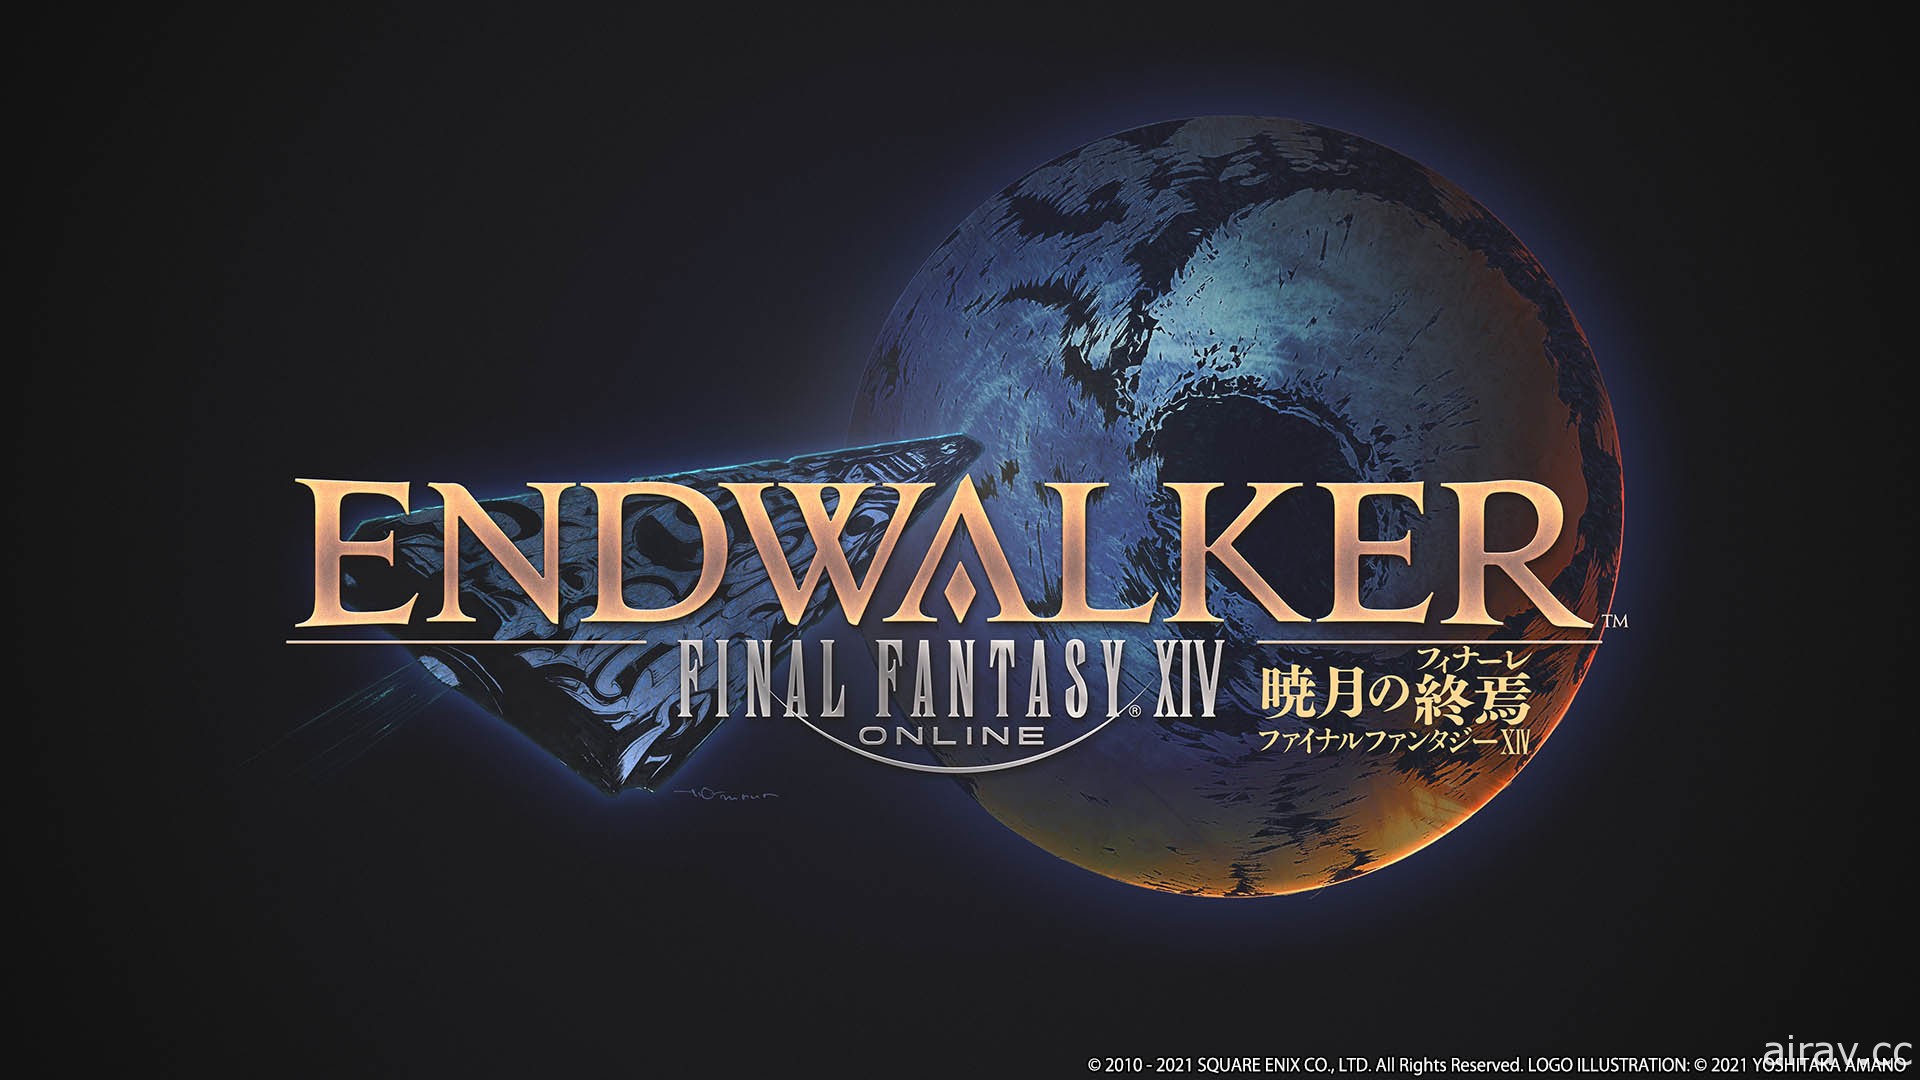 《Final Fantasy XIV》資料片《曉月之終焉》秋季登場 預定 4 月展開 PS5 版公測